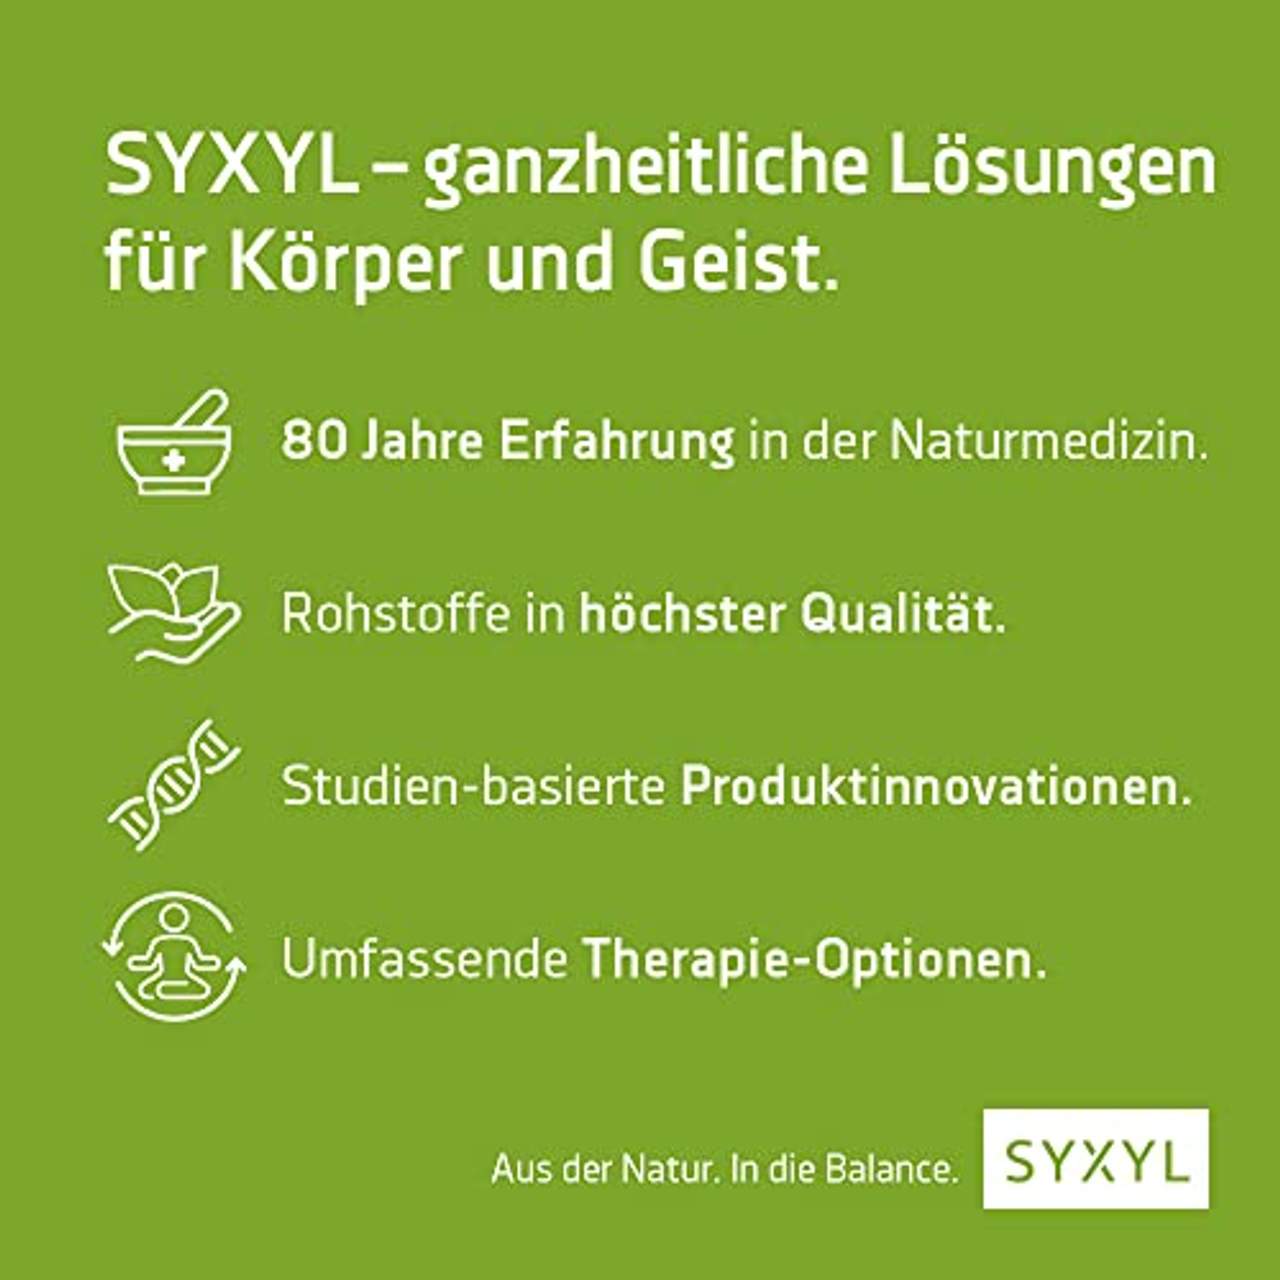 Syxyl Basosyx Classic Tabletten